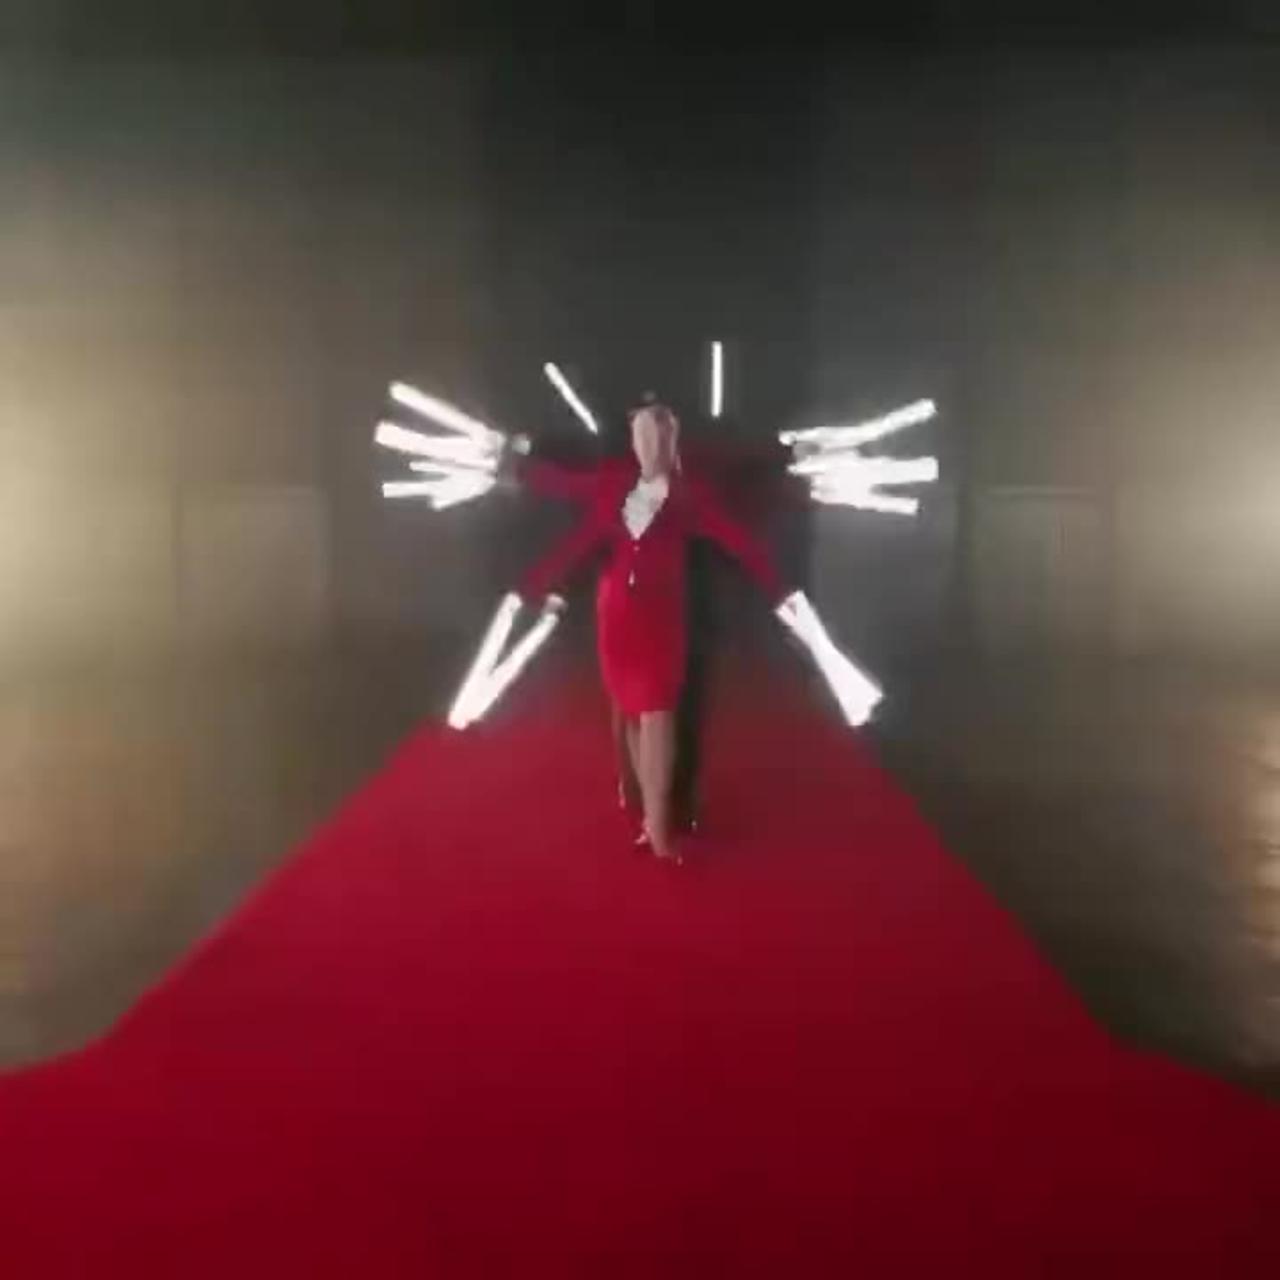 Virgin Atlantic's new transgender and drag queen ad campaign